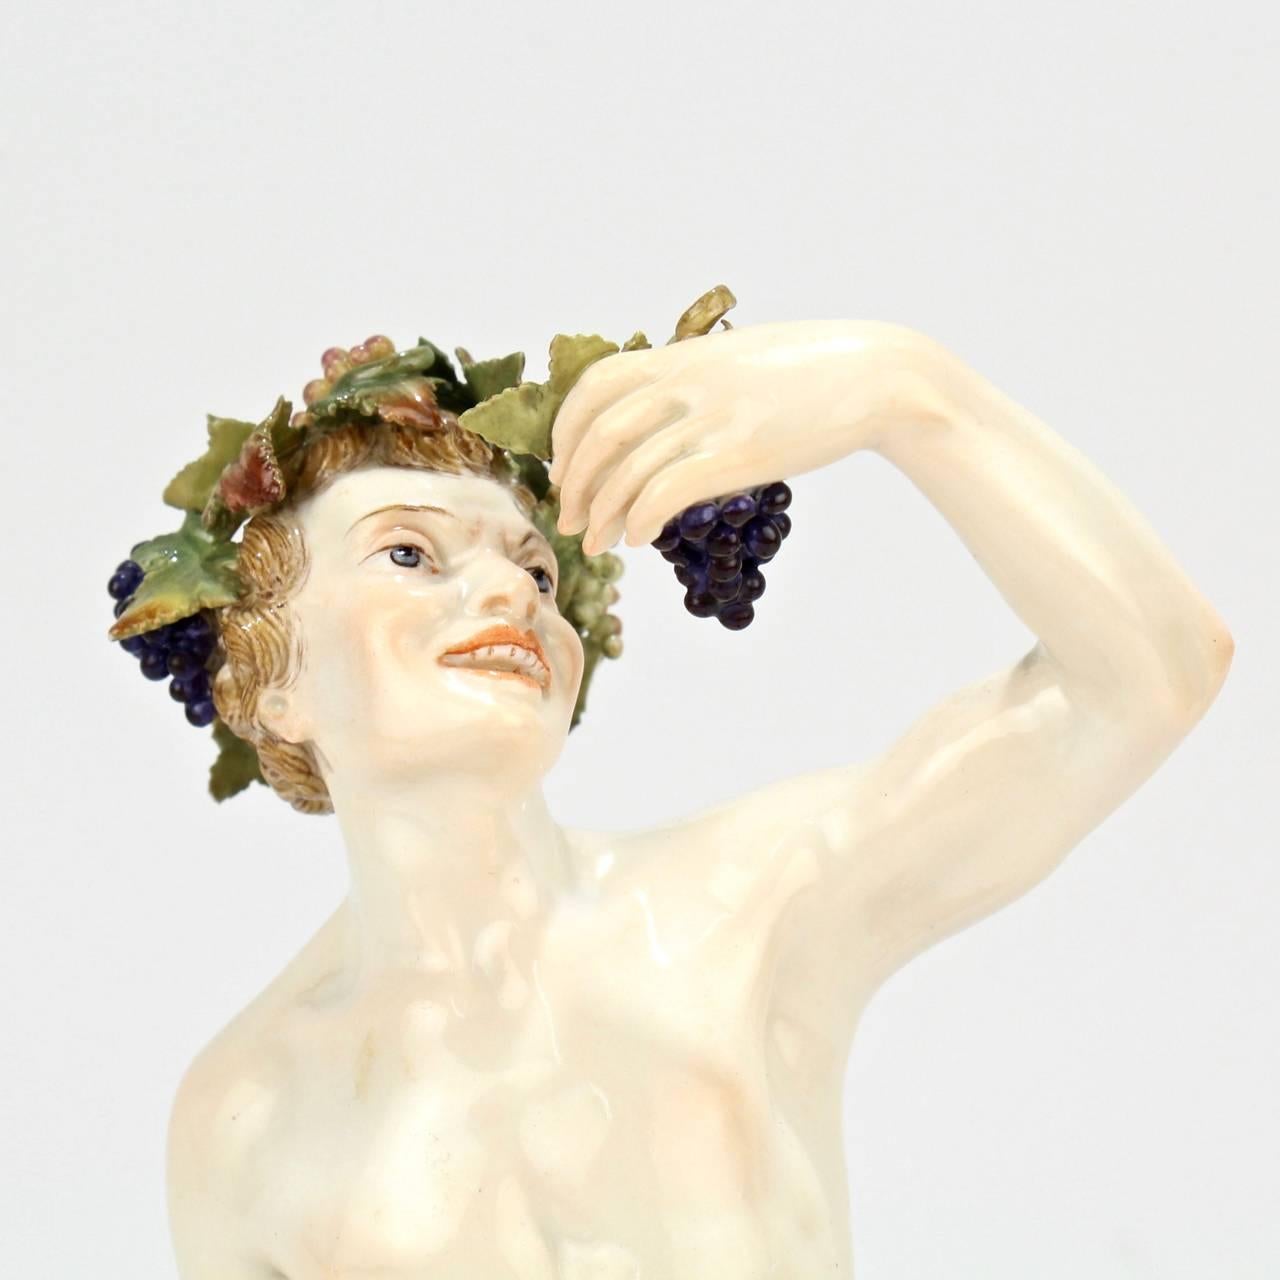 Antique Meissen Porcelain Allegorical Figurine of Bacchus the God of Wine 1